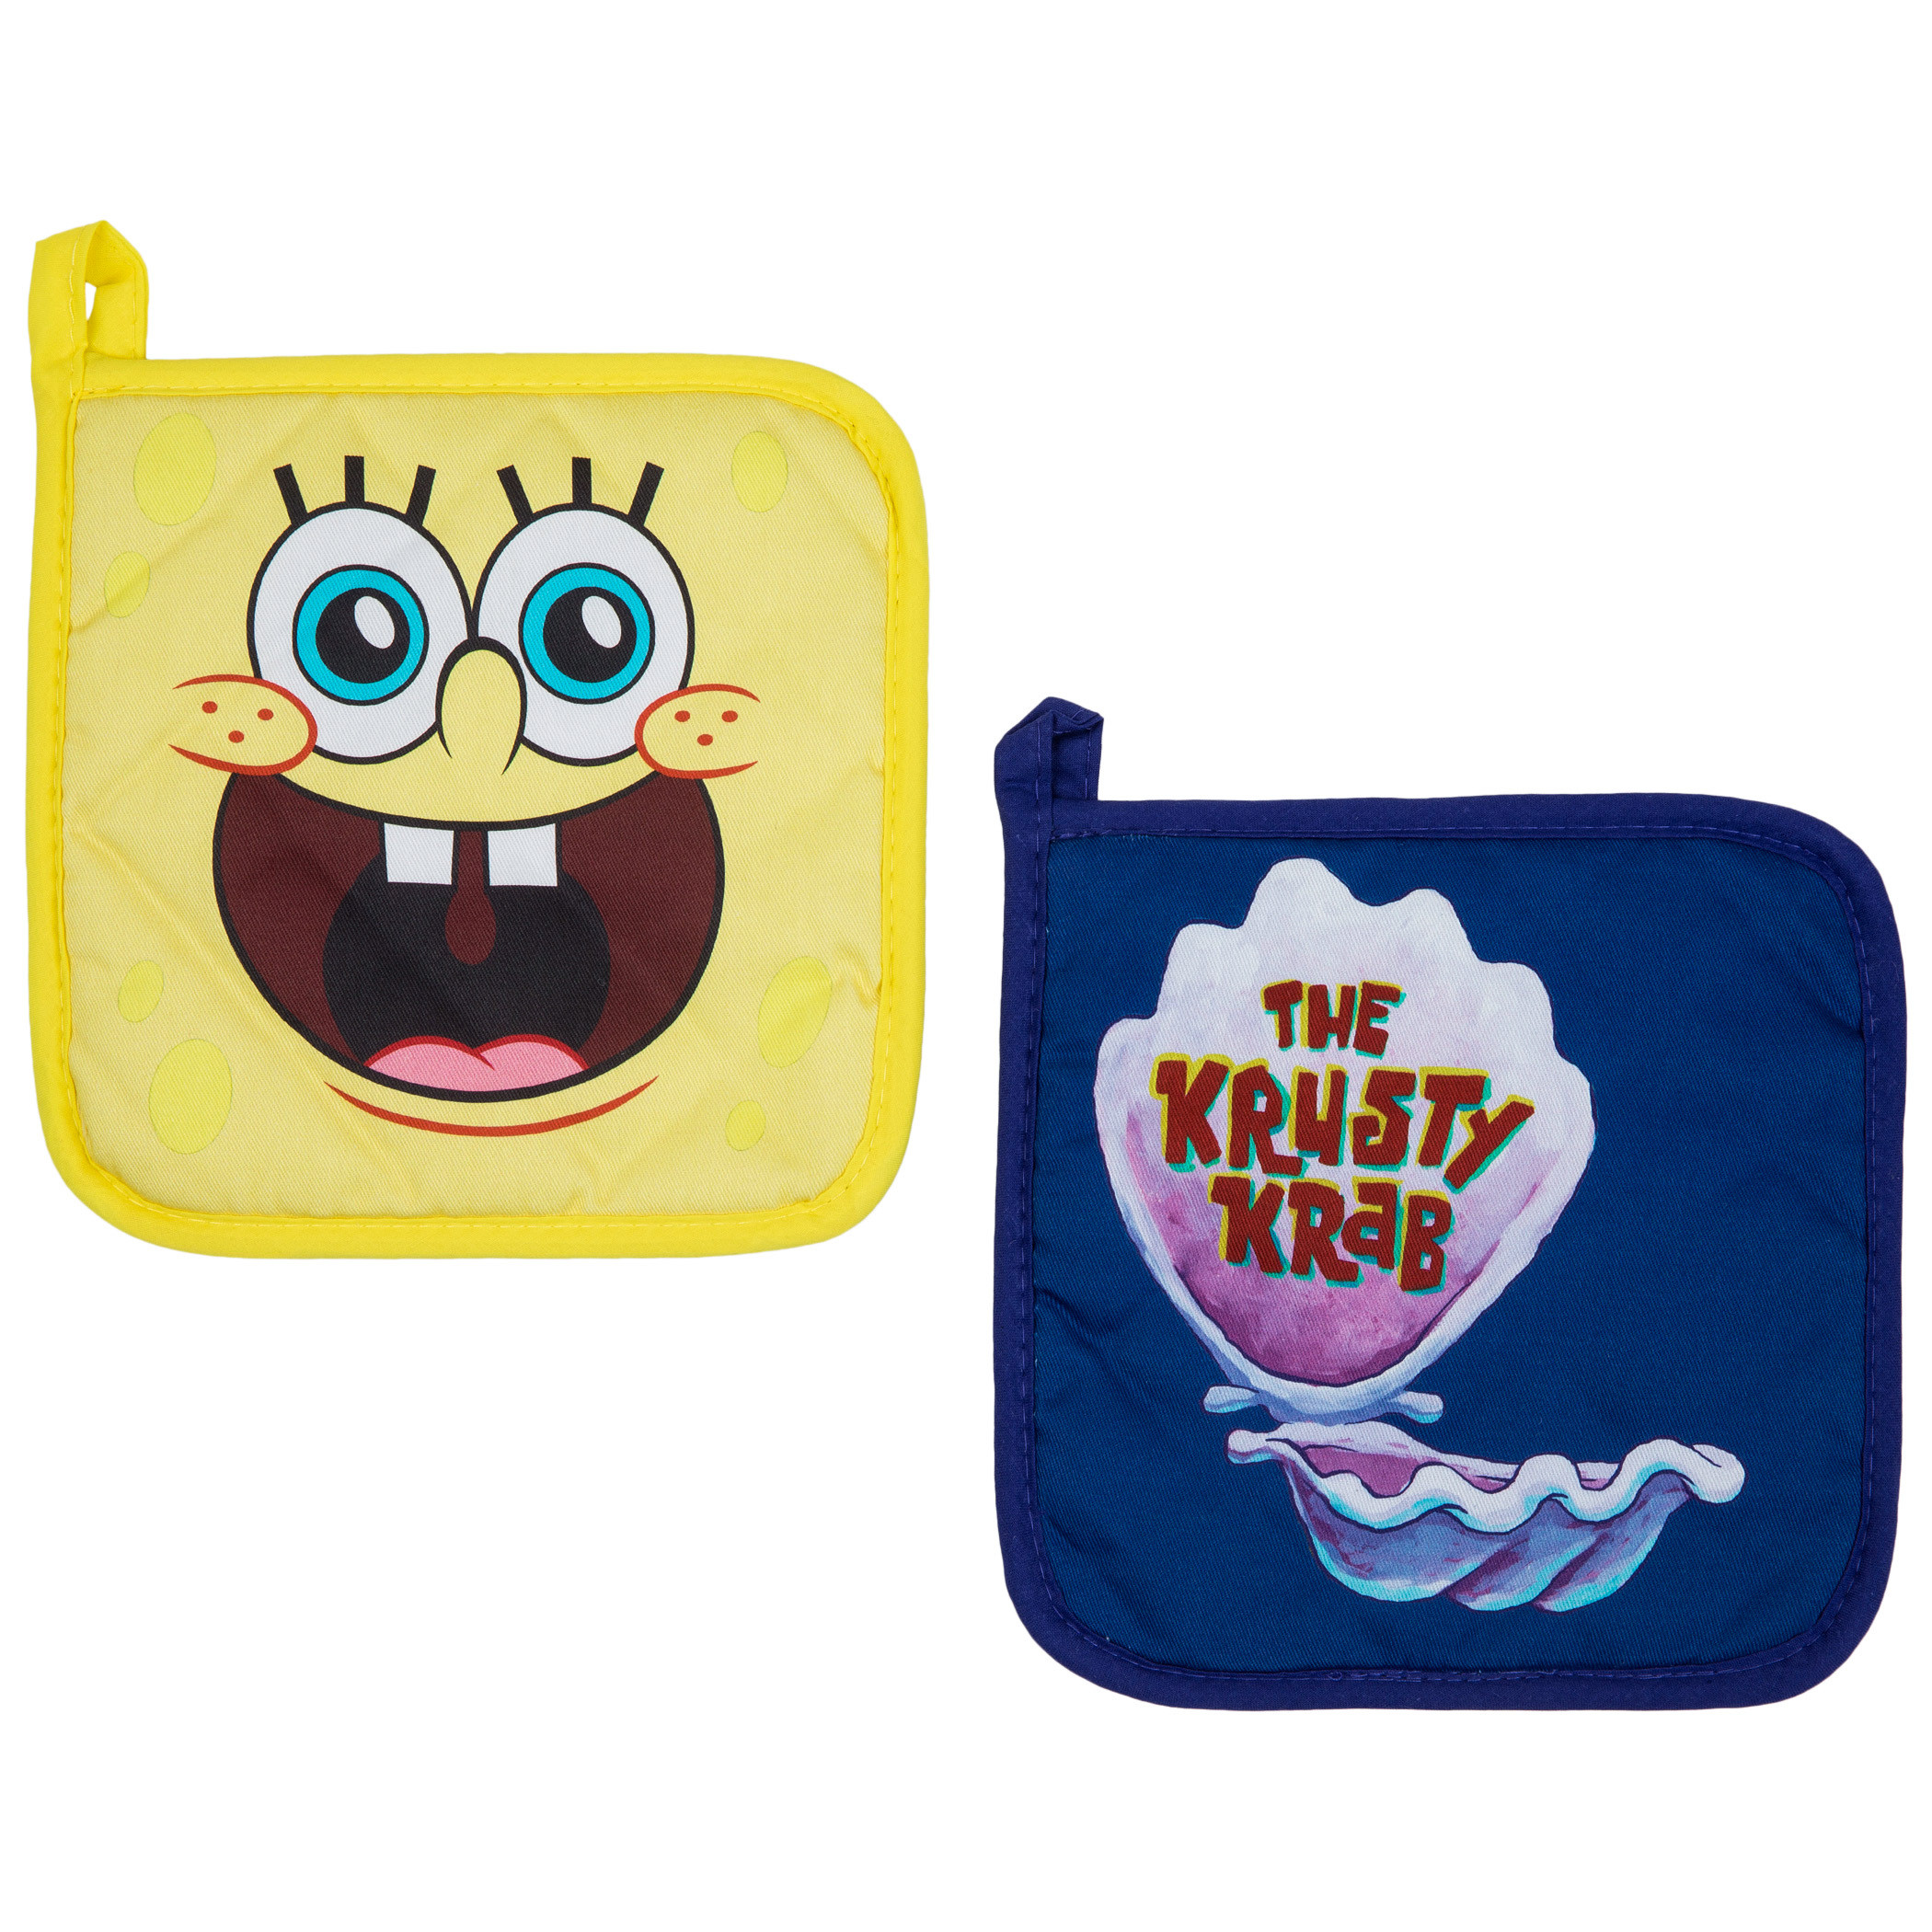 SpongeBob SquarePants and The Krusty Krab Set of 2 Pot Holders